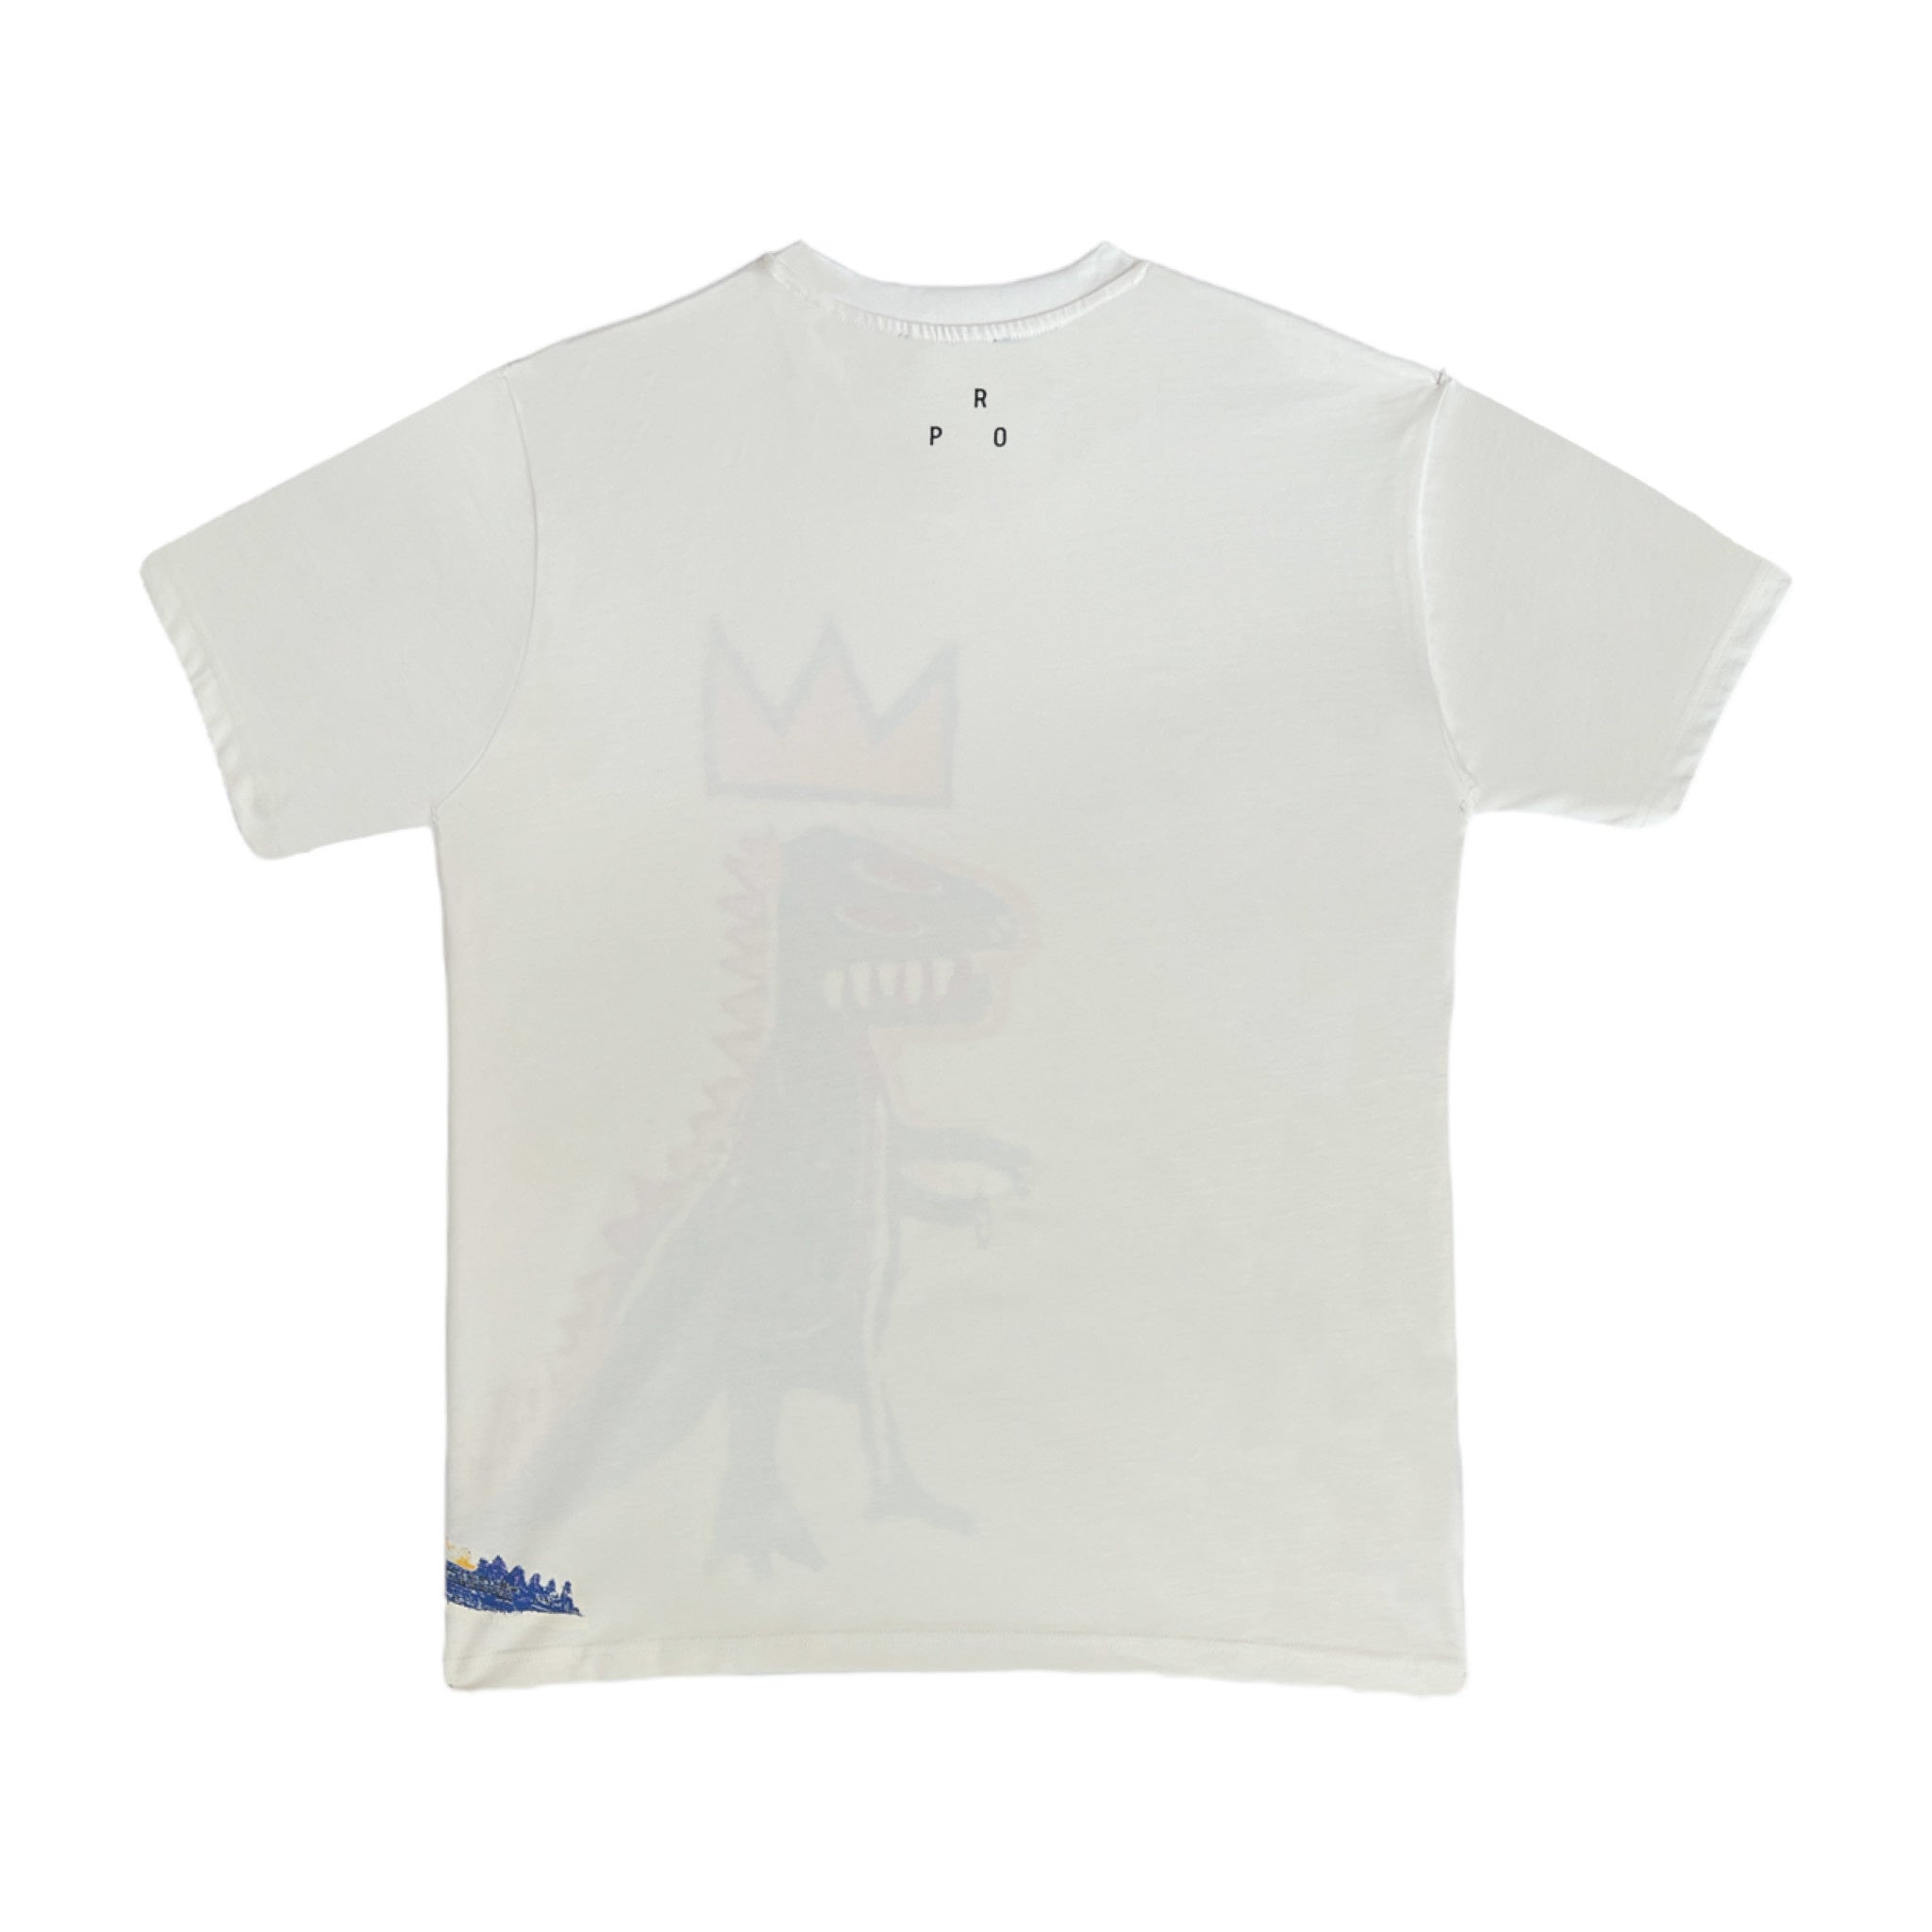 Basquiat PEZ DISPENSER T-Shirt Sand - Wynwood Walls Shop